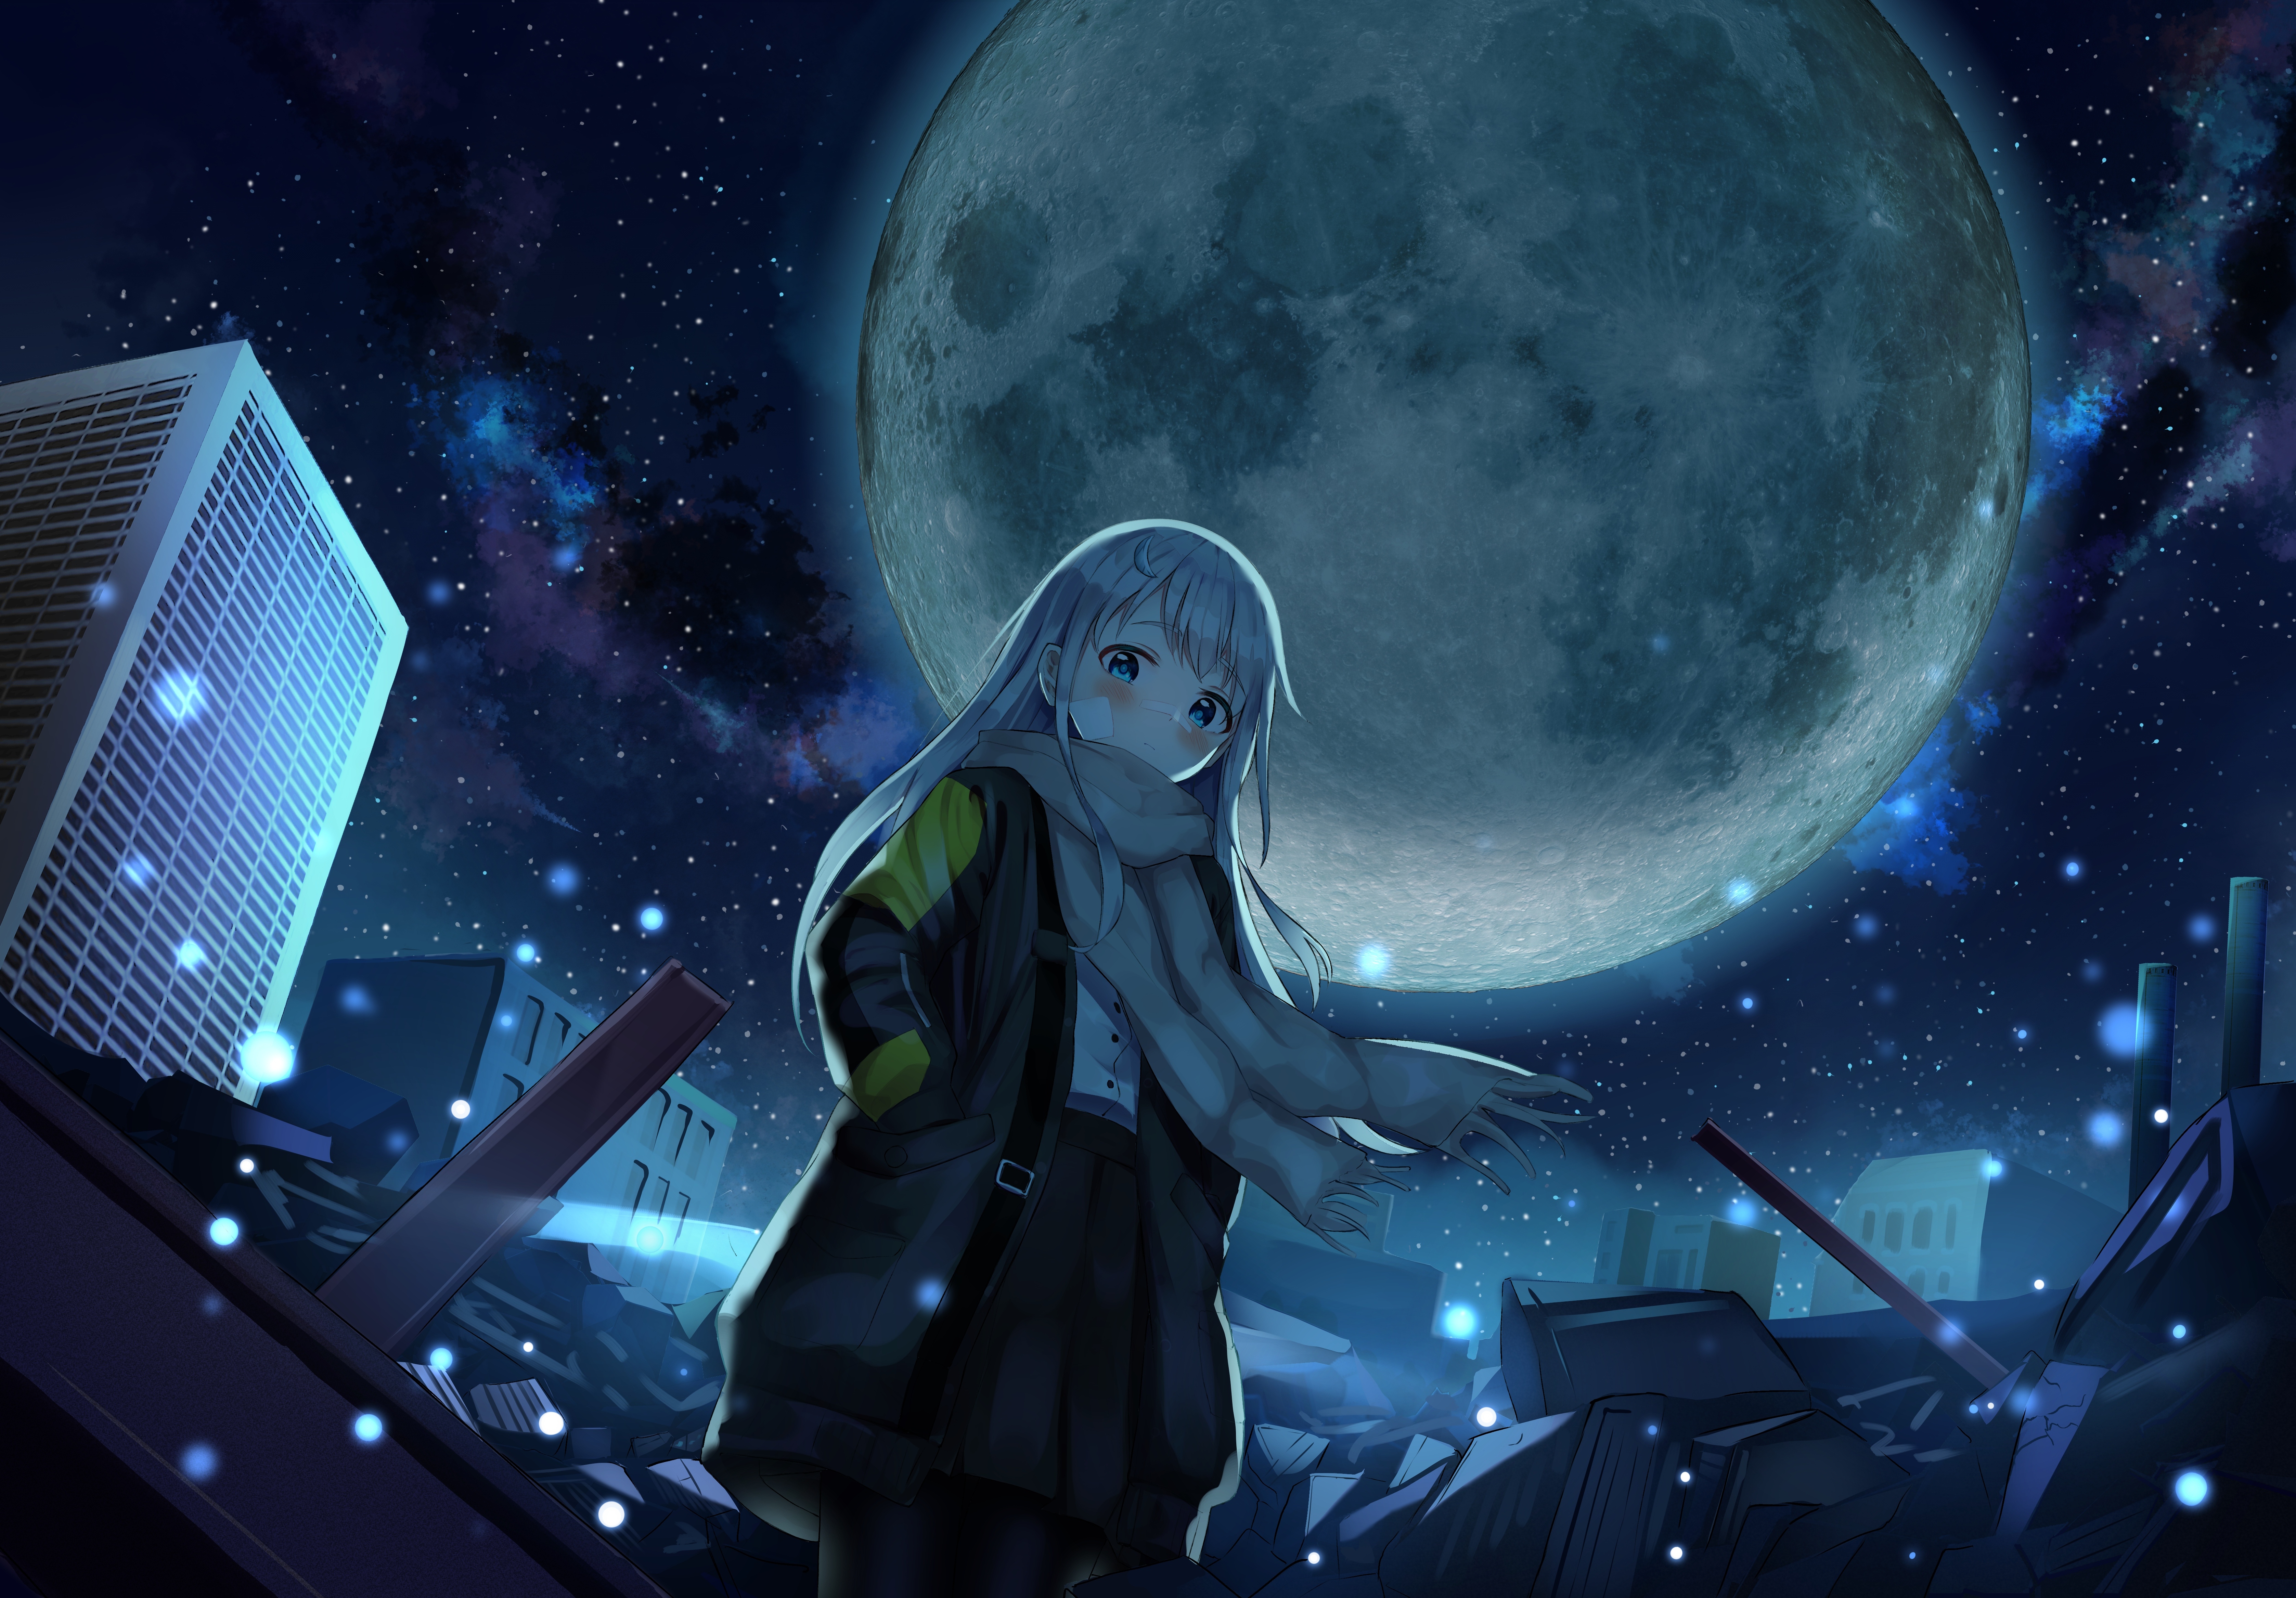 Wallpaper Anime Girl, Anime Night, Winter, Starry Sky, Giant Moon:6710x4671